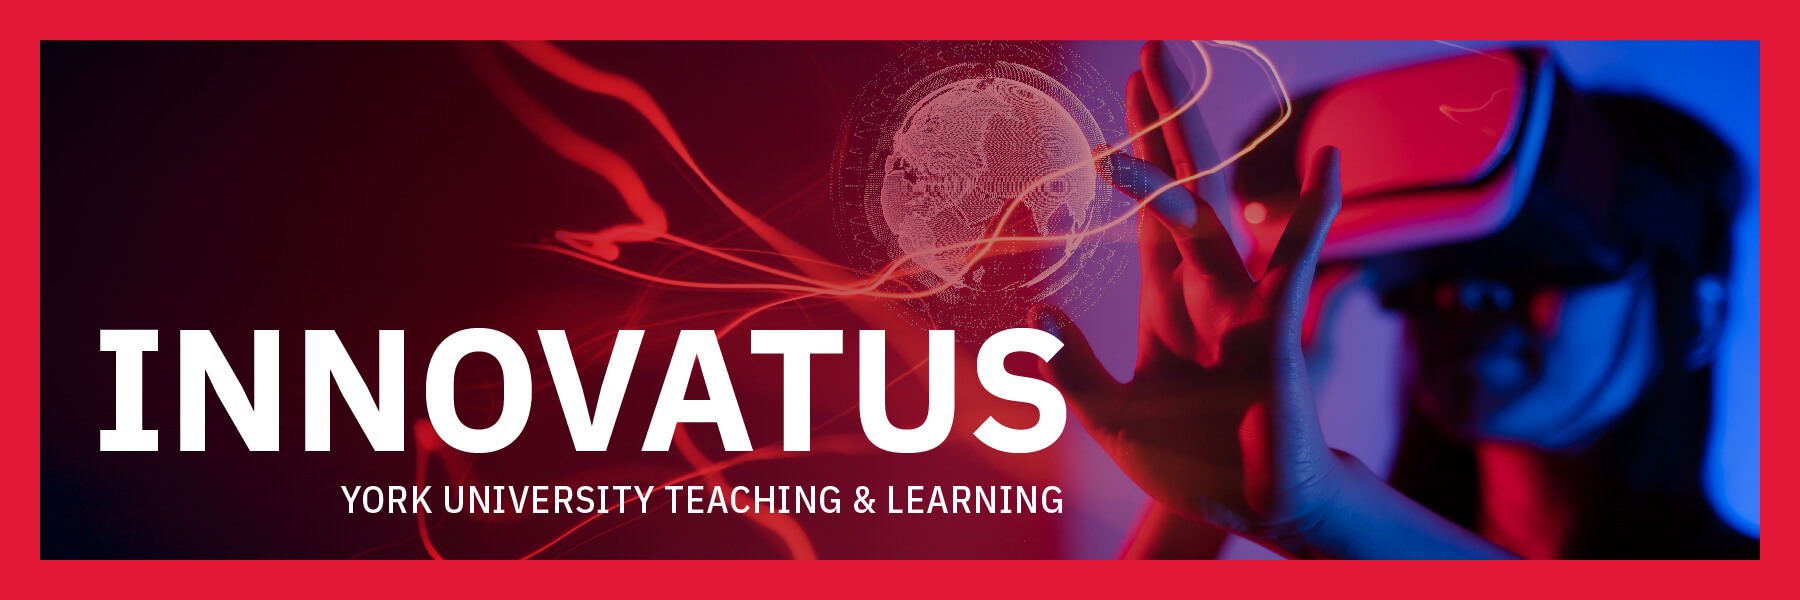 Innovatus - York University Teaching and Learning